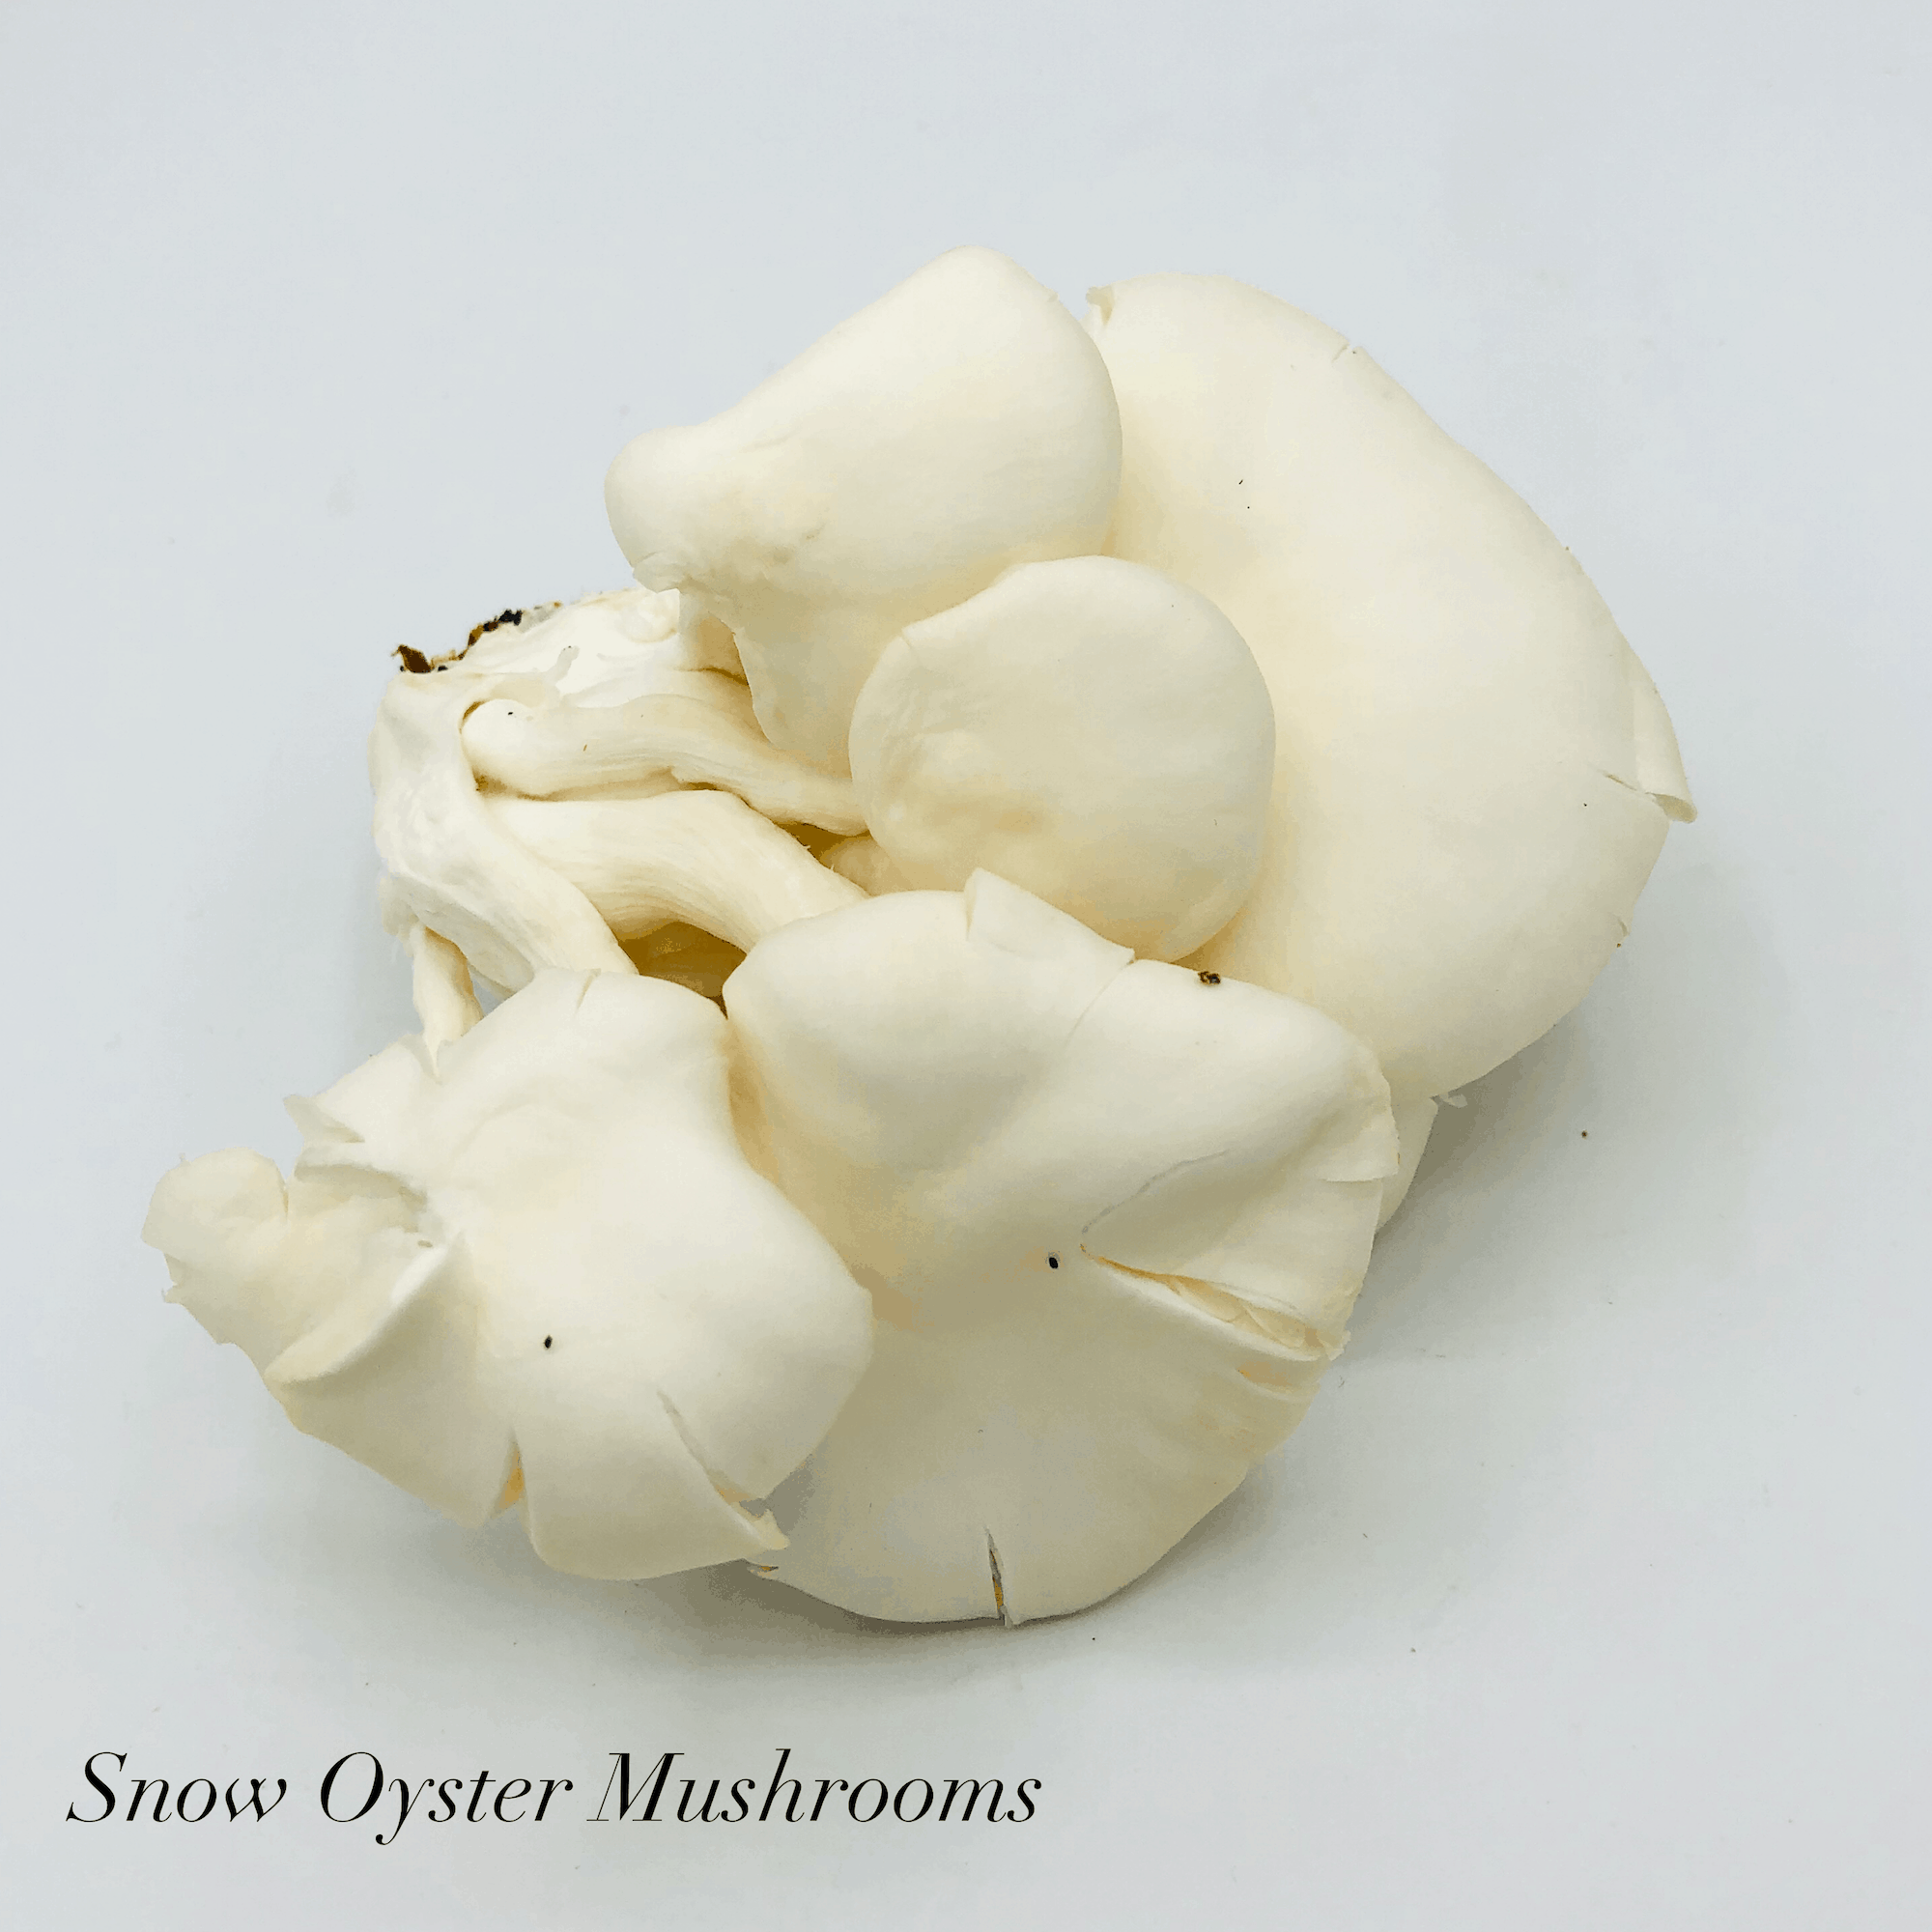 Snow Oyster Mushrooms